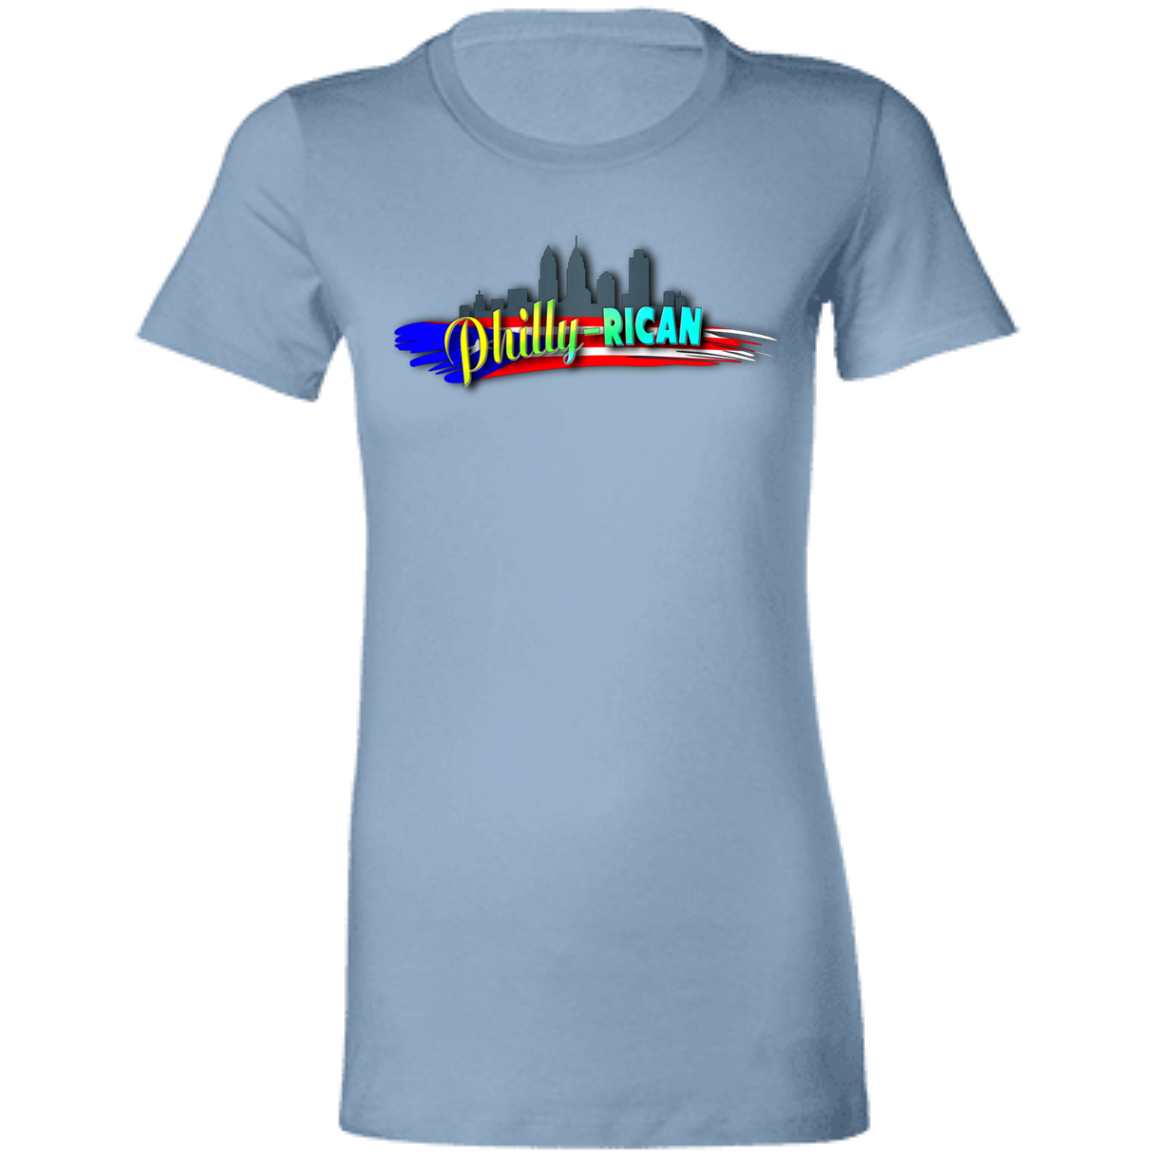 Philly-Rican Ladies' Favorite T-Shirt - Puerto Rican Pride